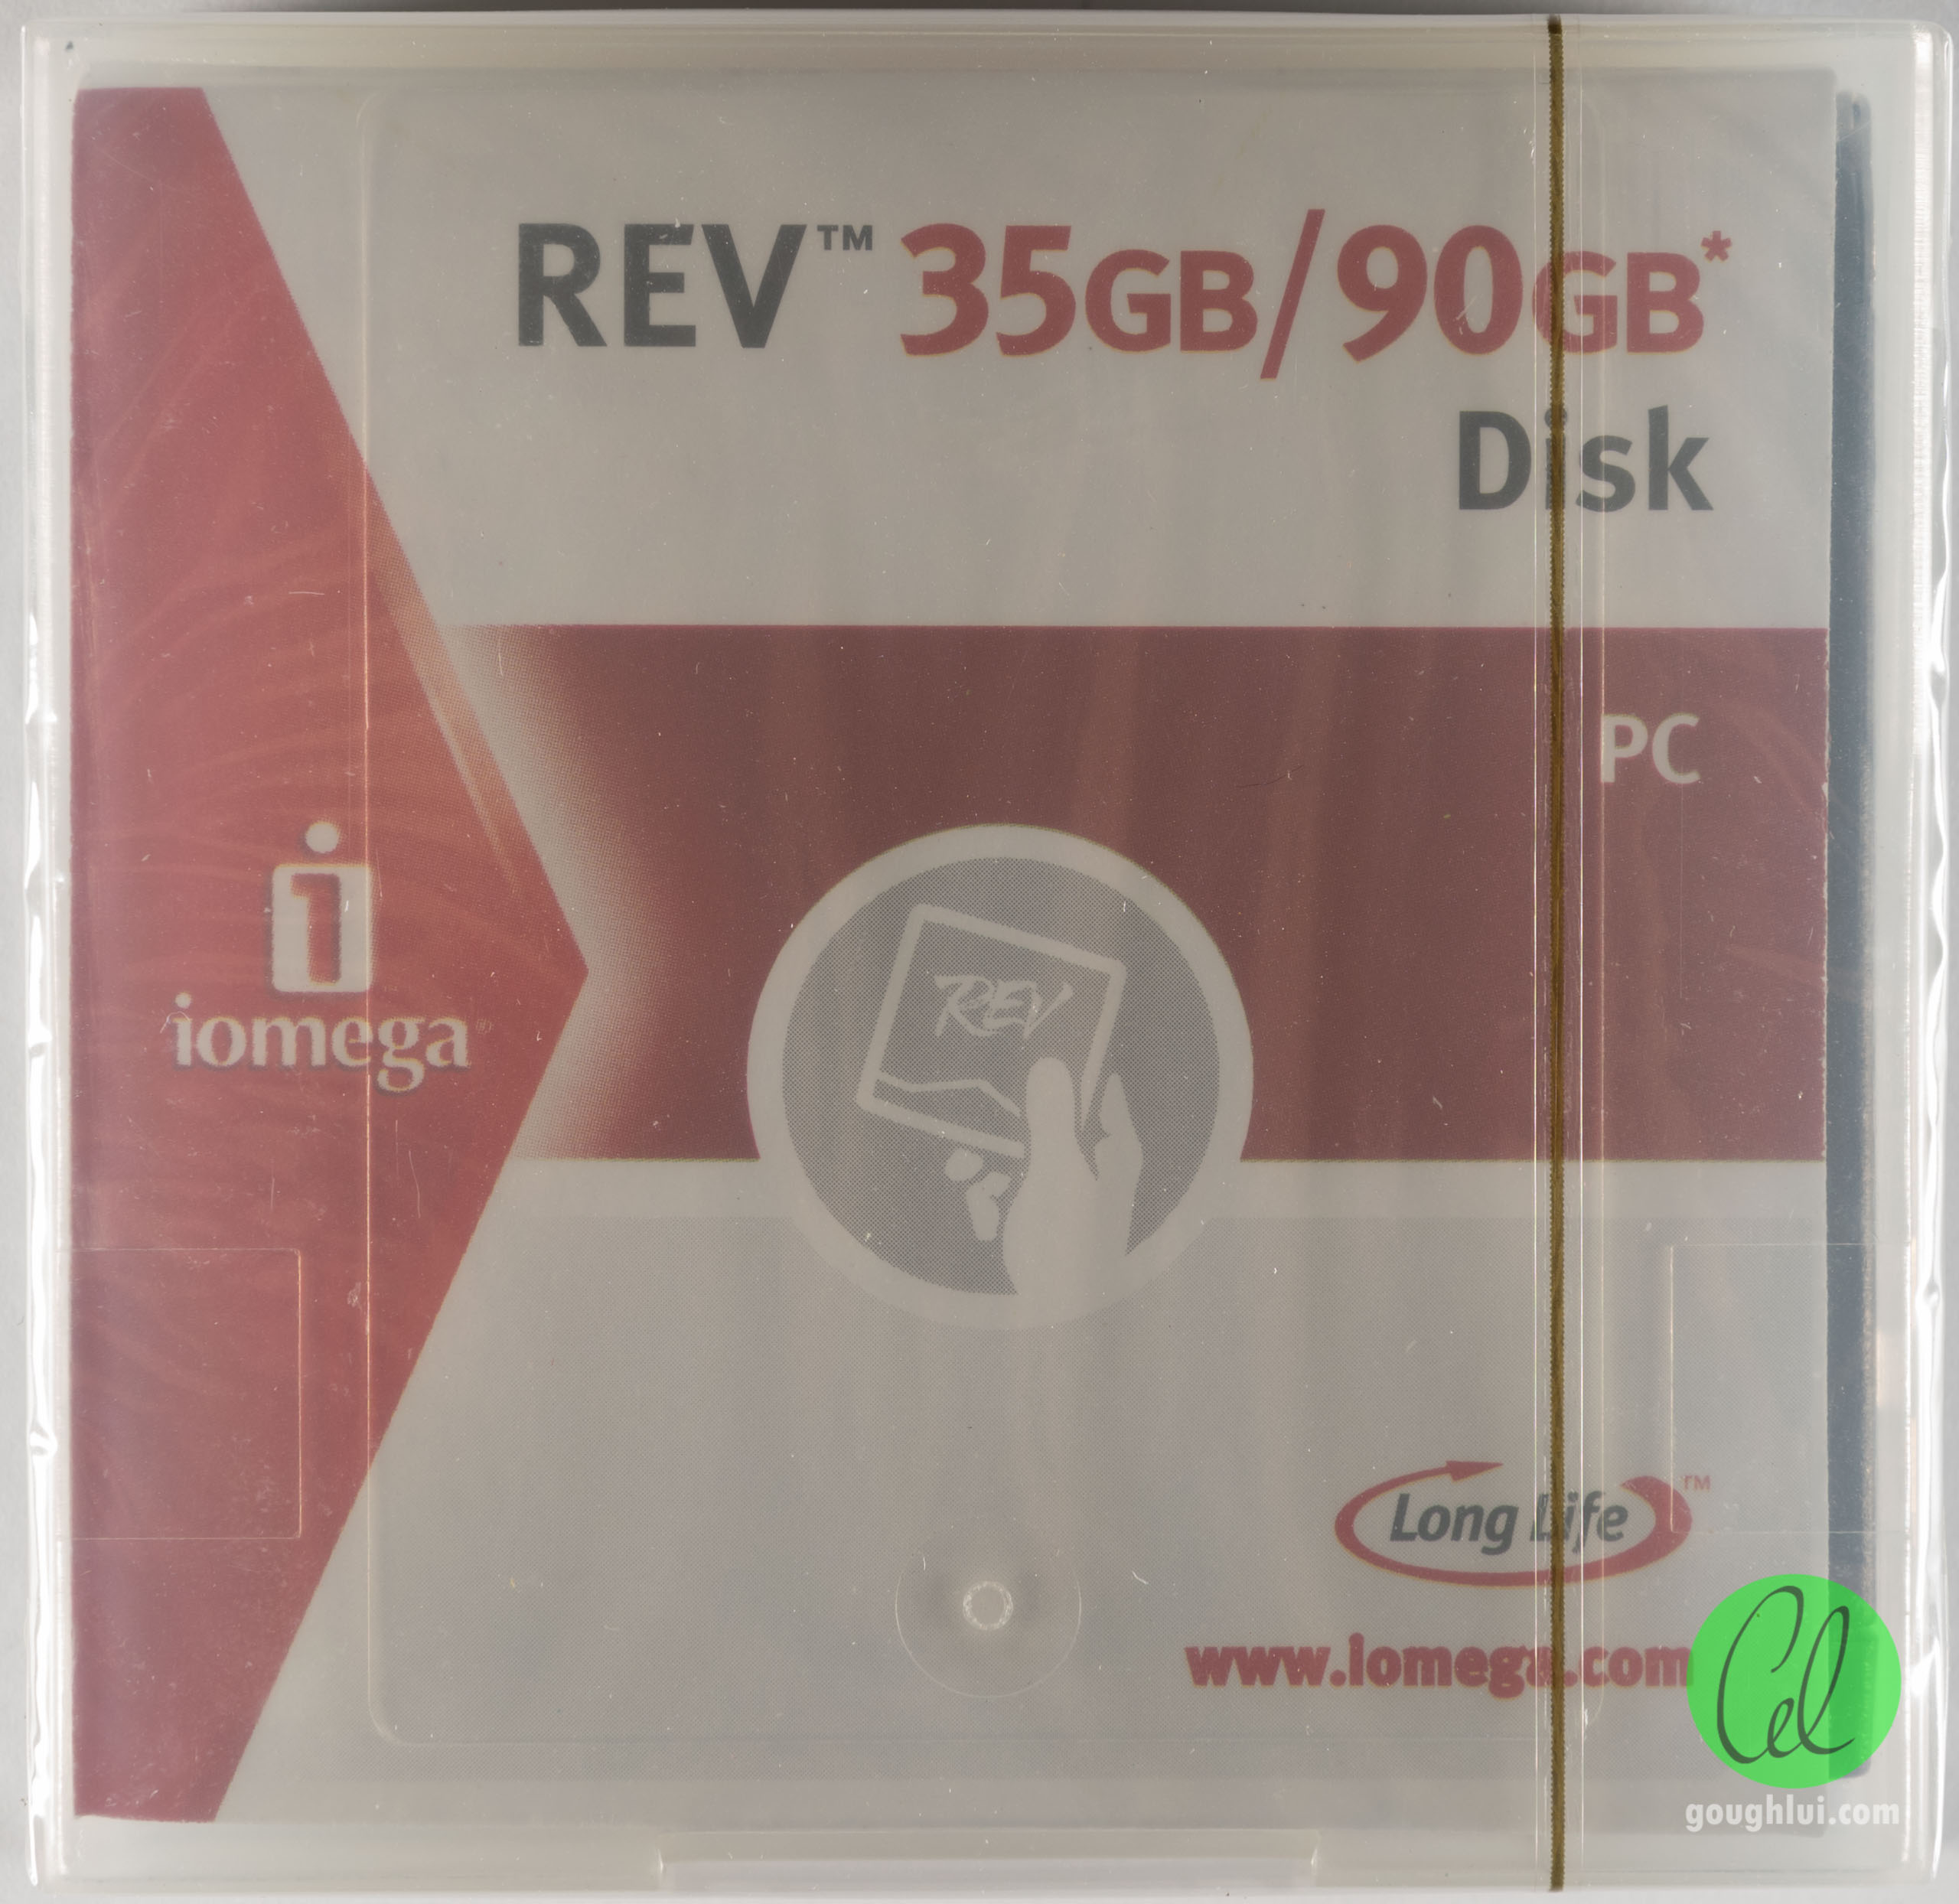 Canb2016: Special 2 – iomega REV 35Gb/90Gb Drives & Disks 